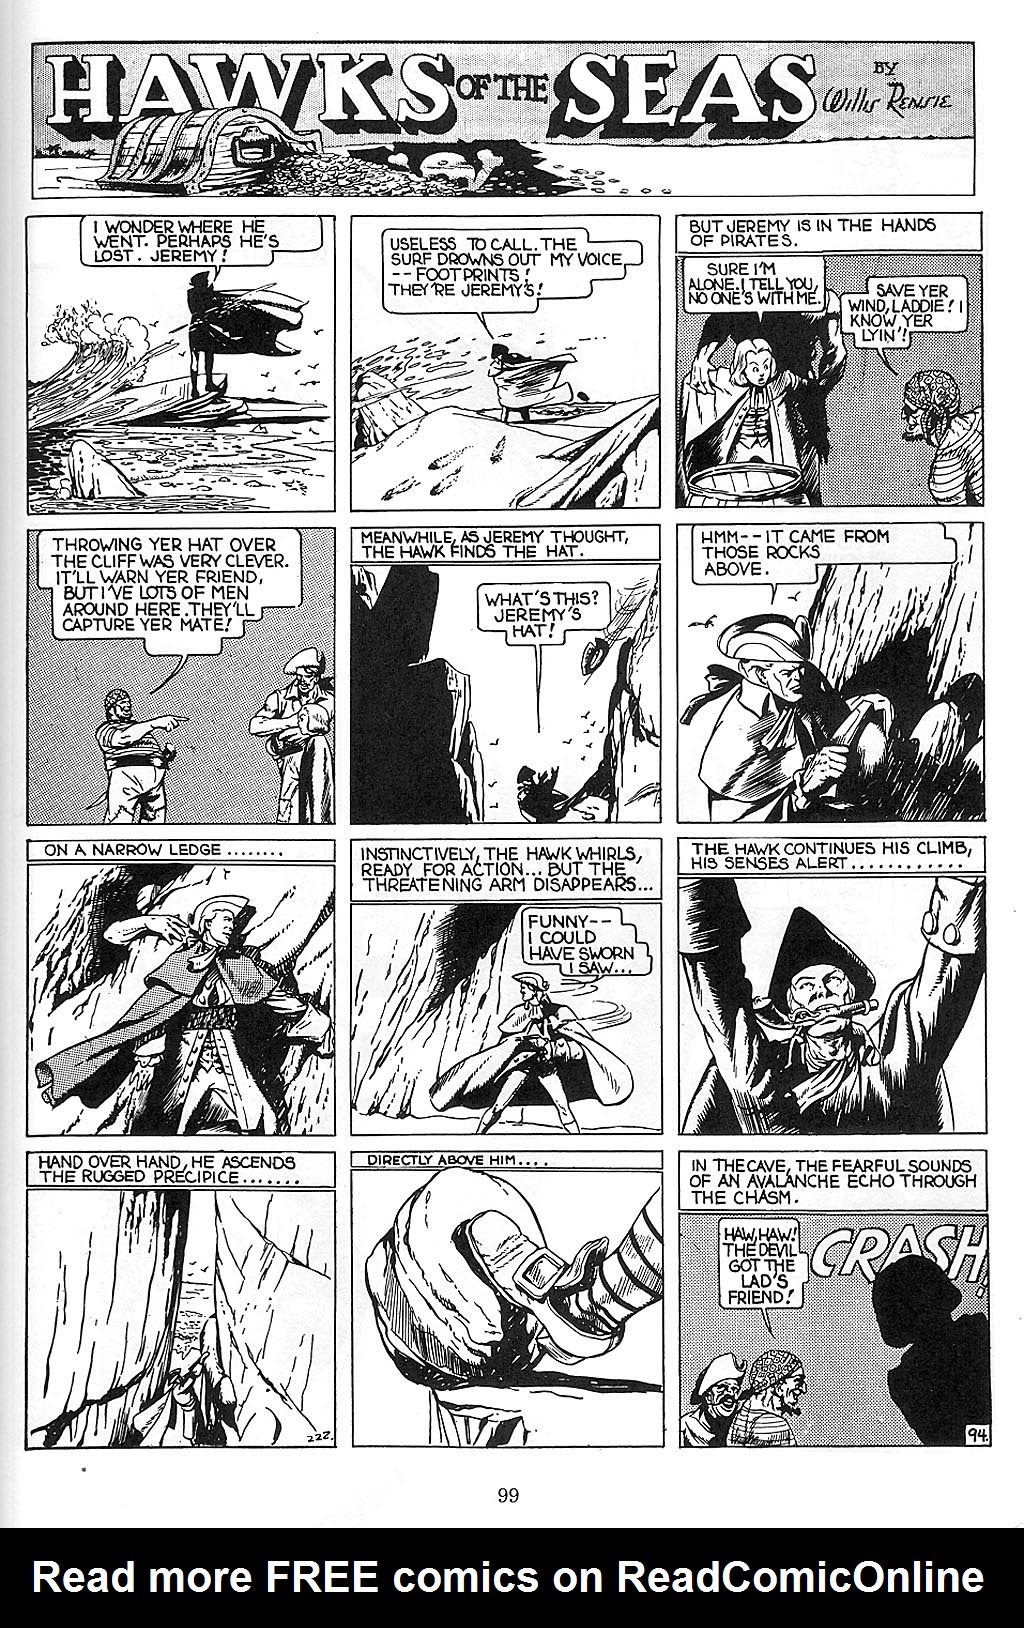 Read online Will Eisner's Hawks of the Seas comic -  Issue # TPB - 100